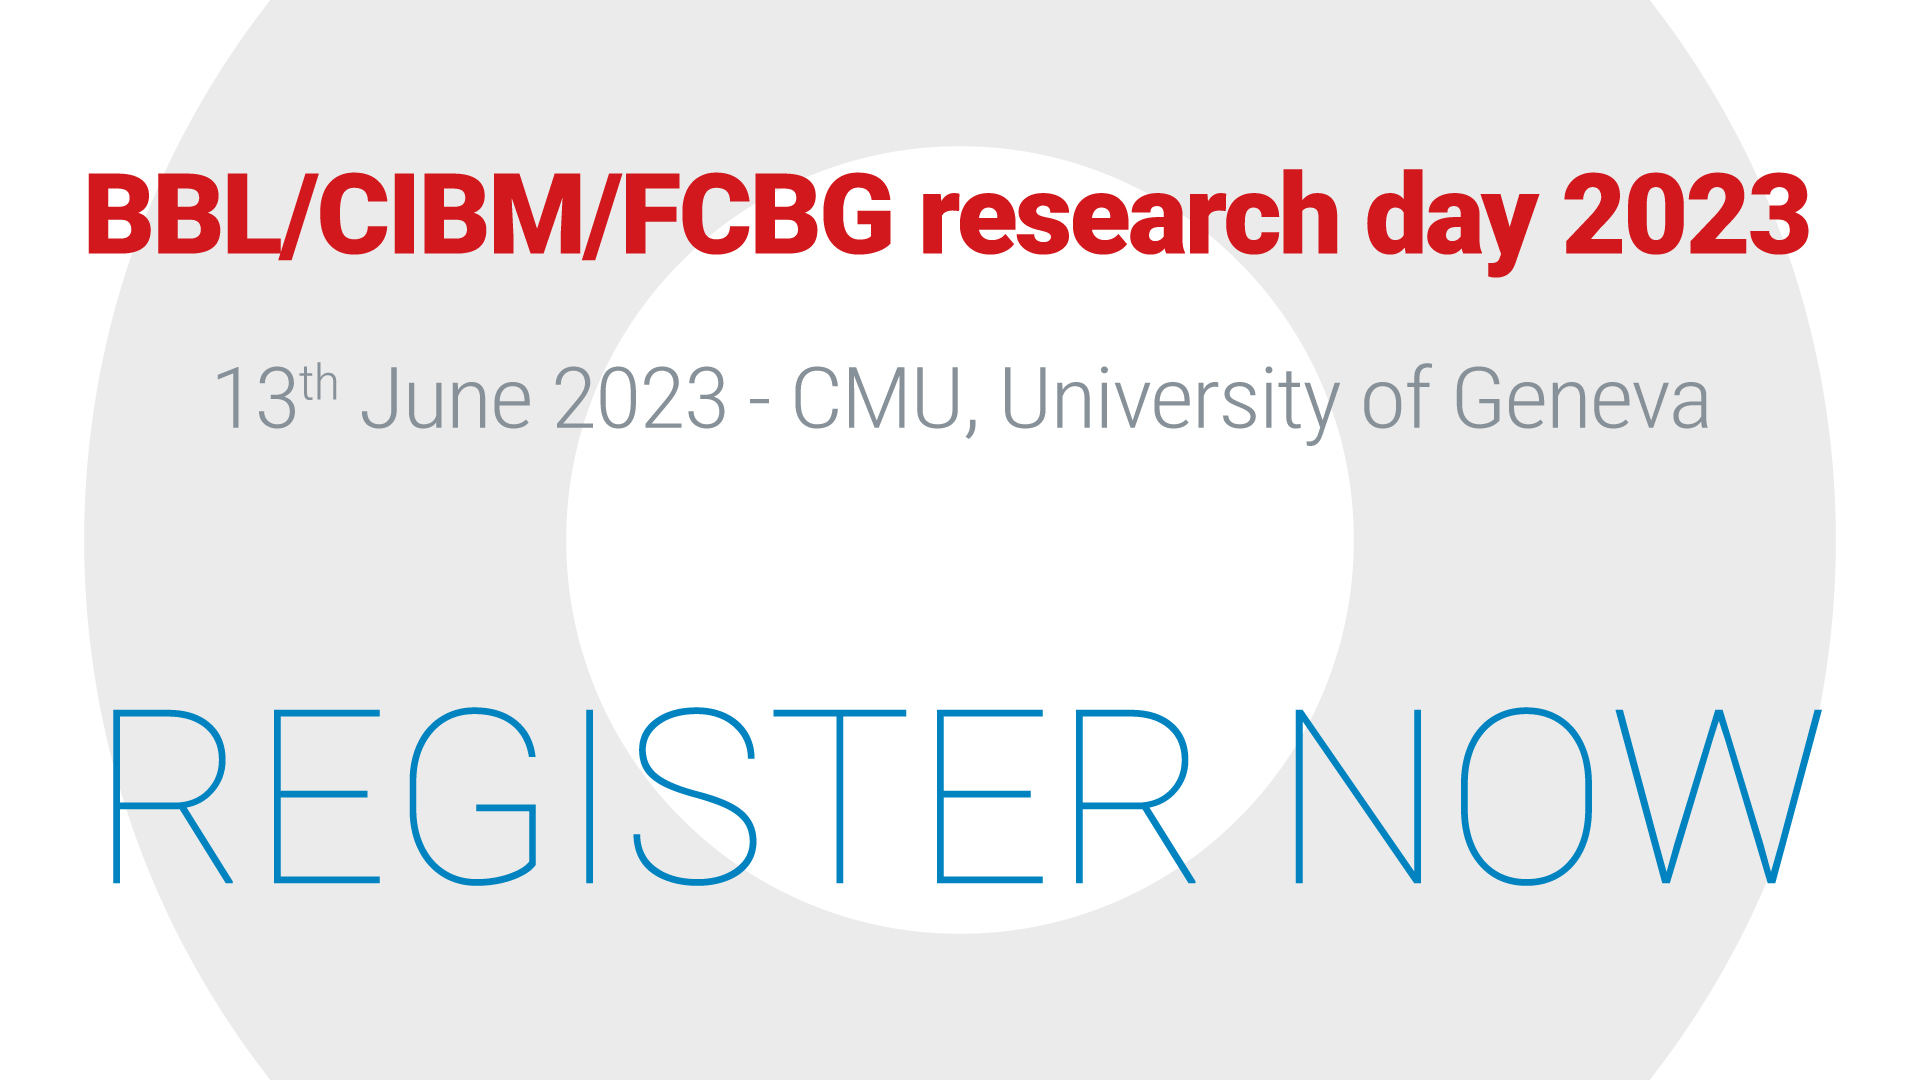 BBL-CIBM-FCBG Research Day 2023